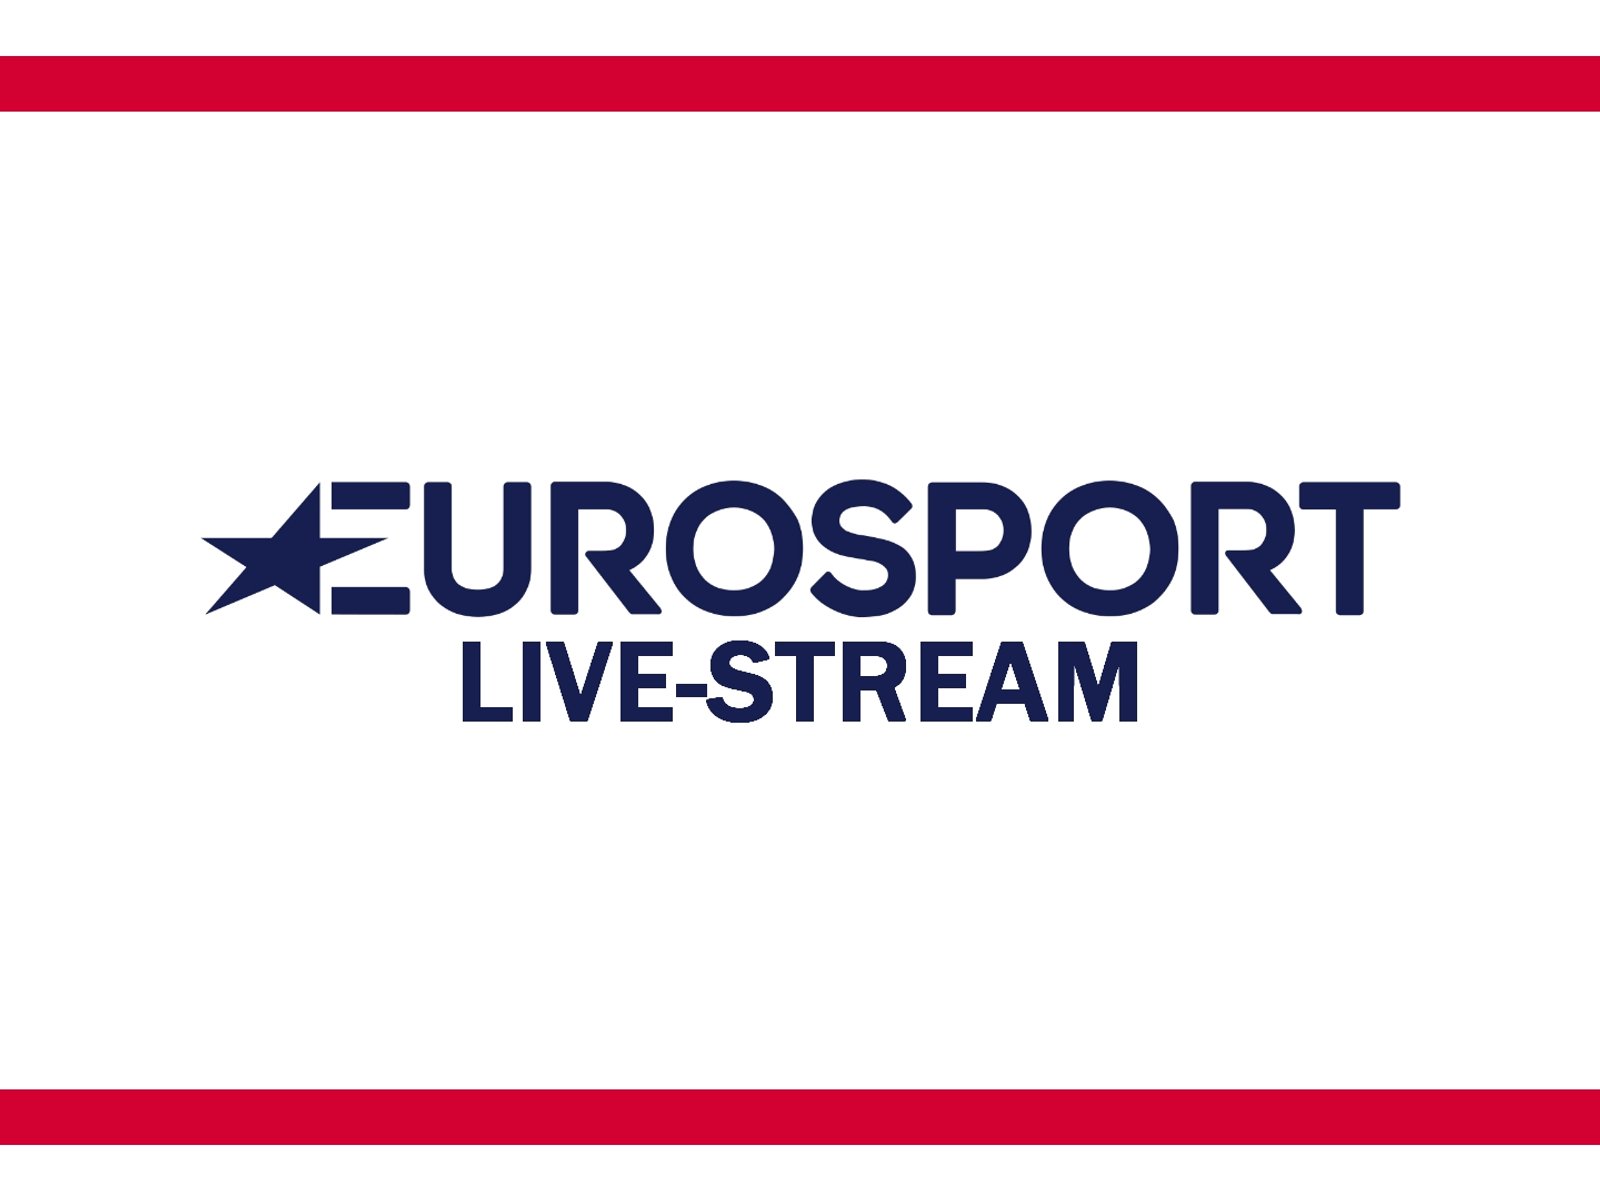 eurosport 1 stream